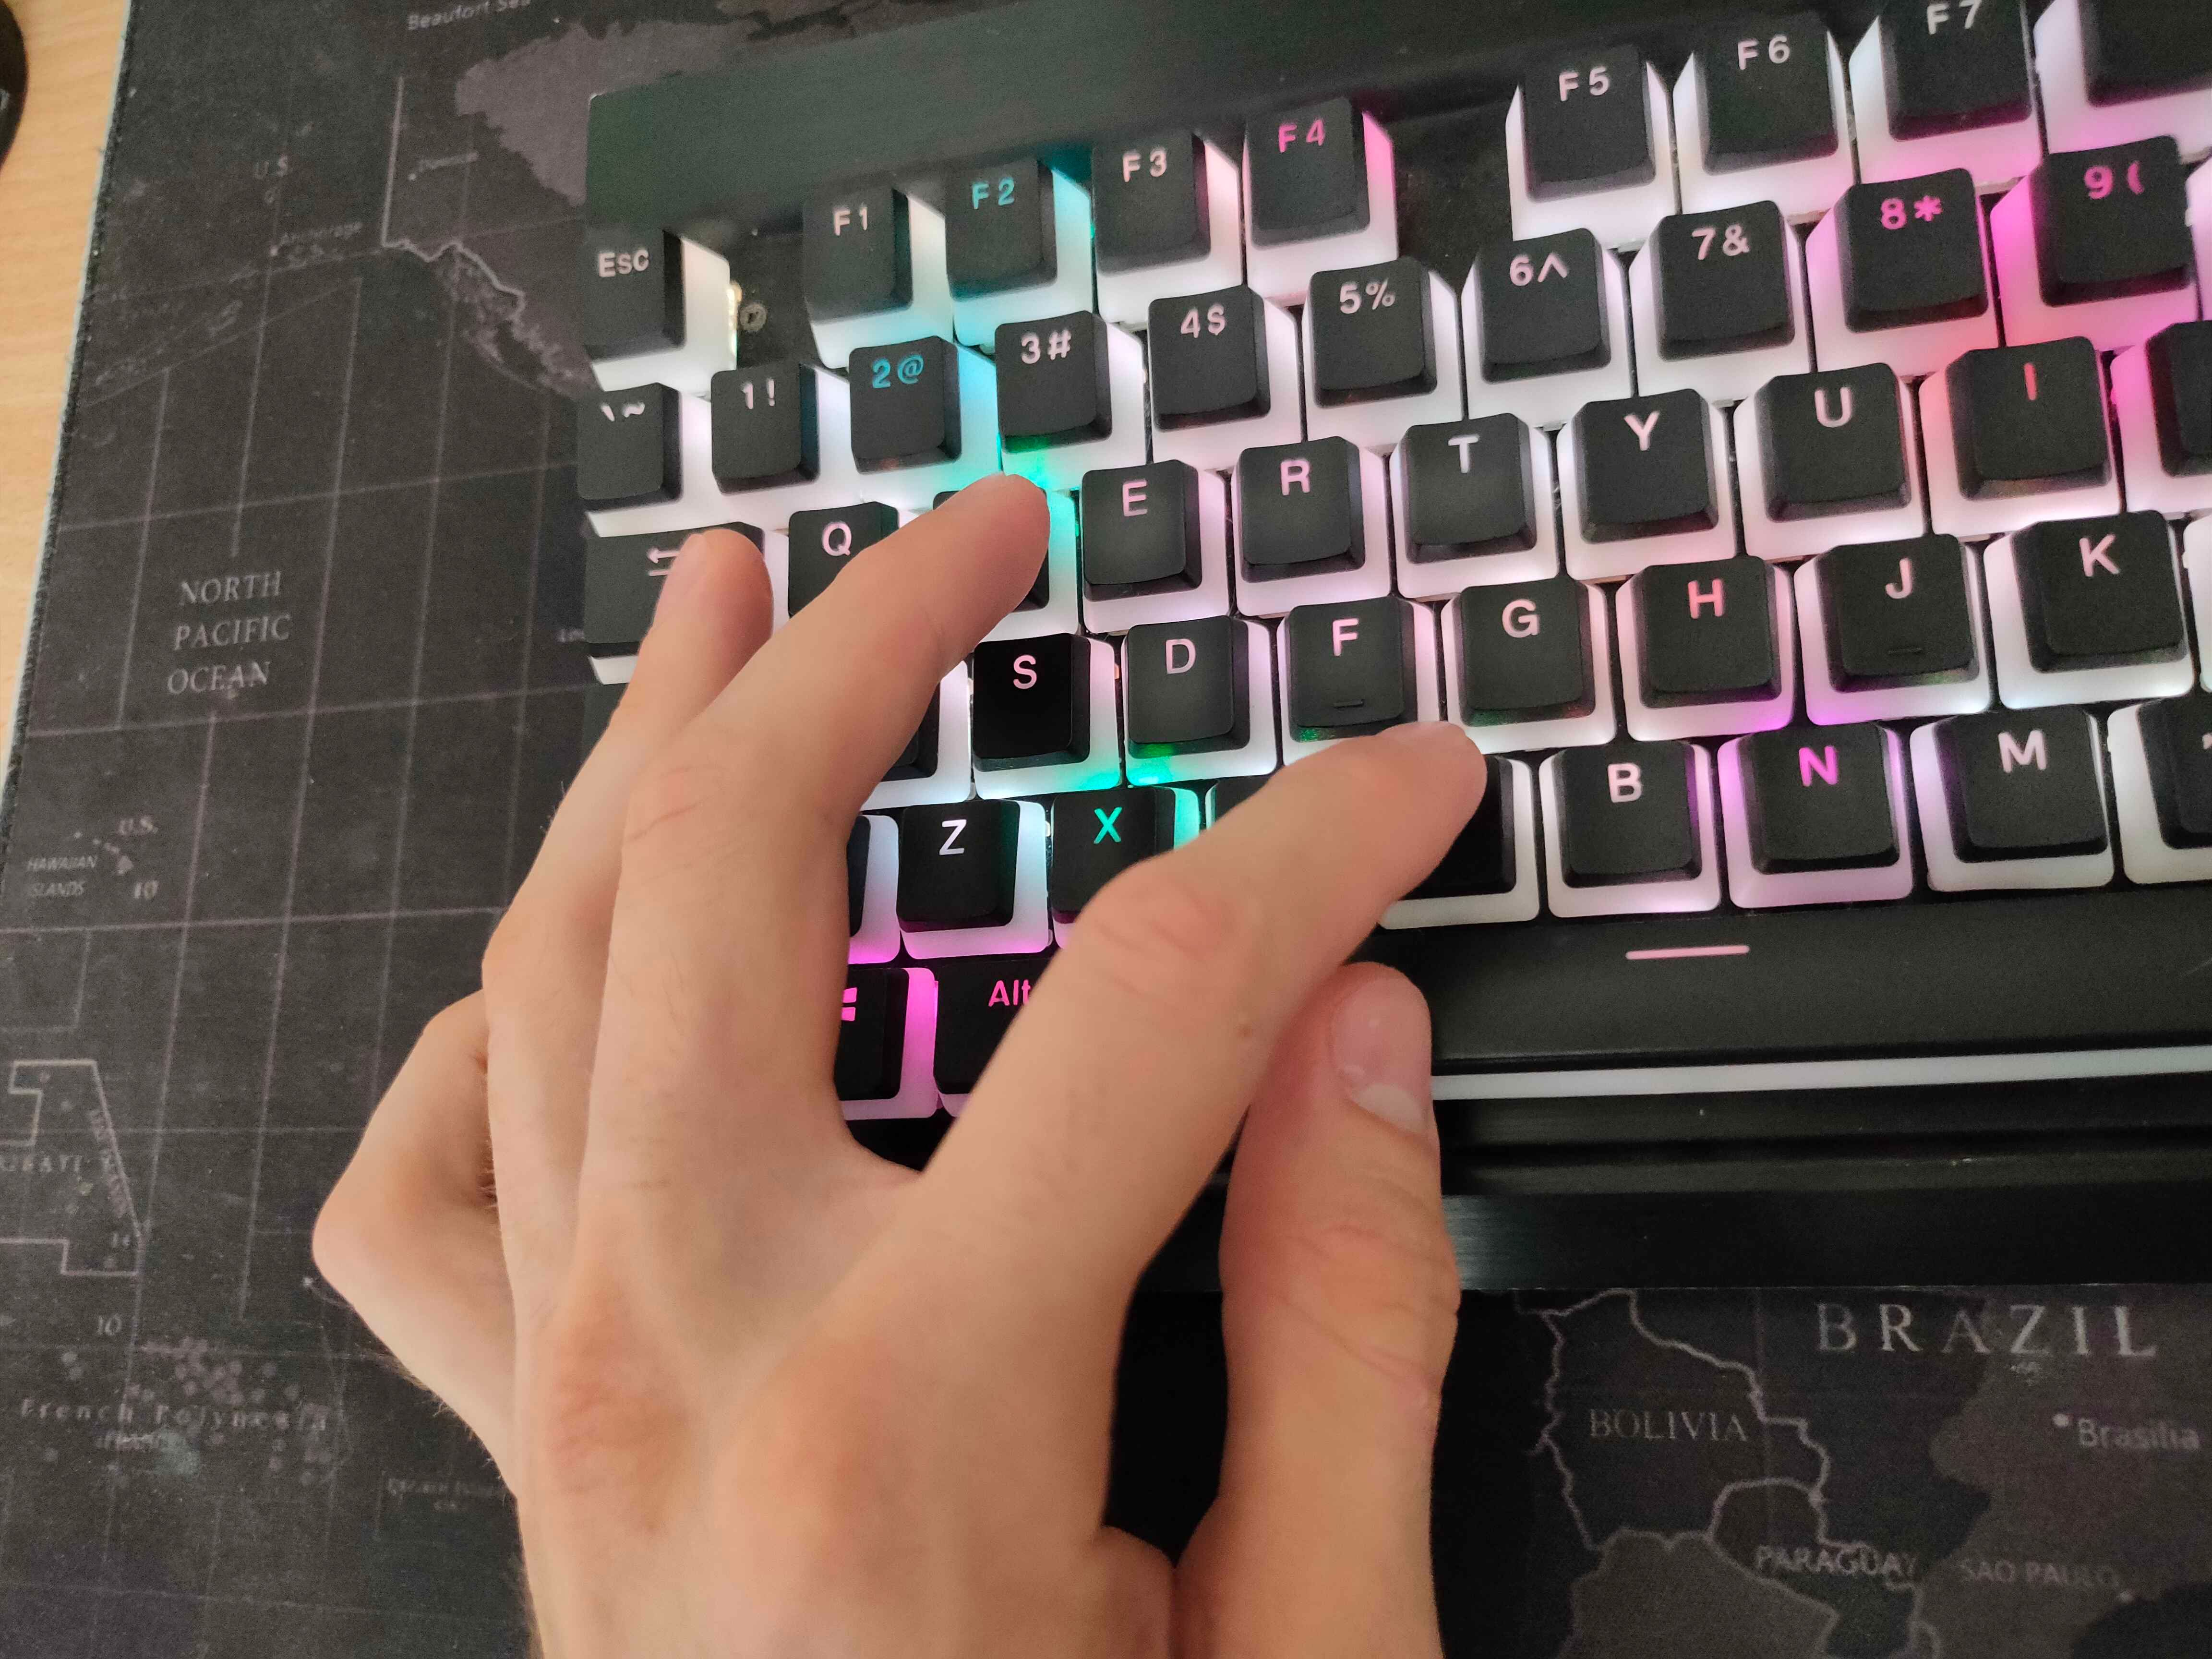 Fingers in awkward position on a keyboard.